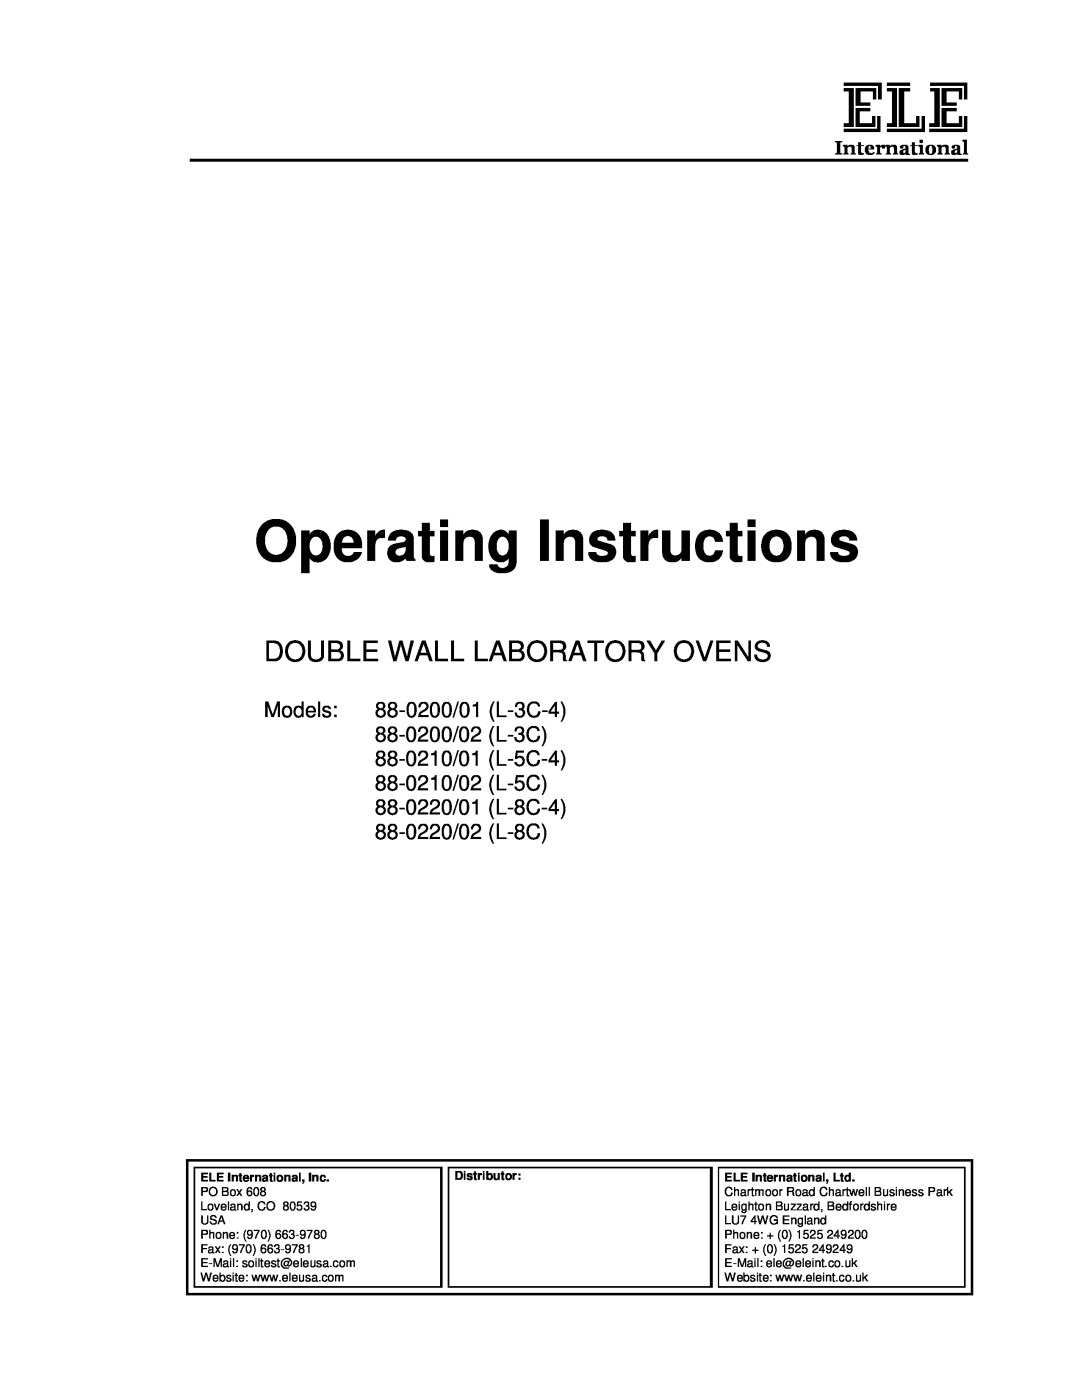 Ele 88-0200/02 (L-3C) manual Operating Instructions, Double Wall Laboratory Ovens, ELE International, Inc, Distributor 